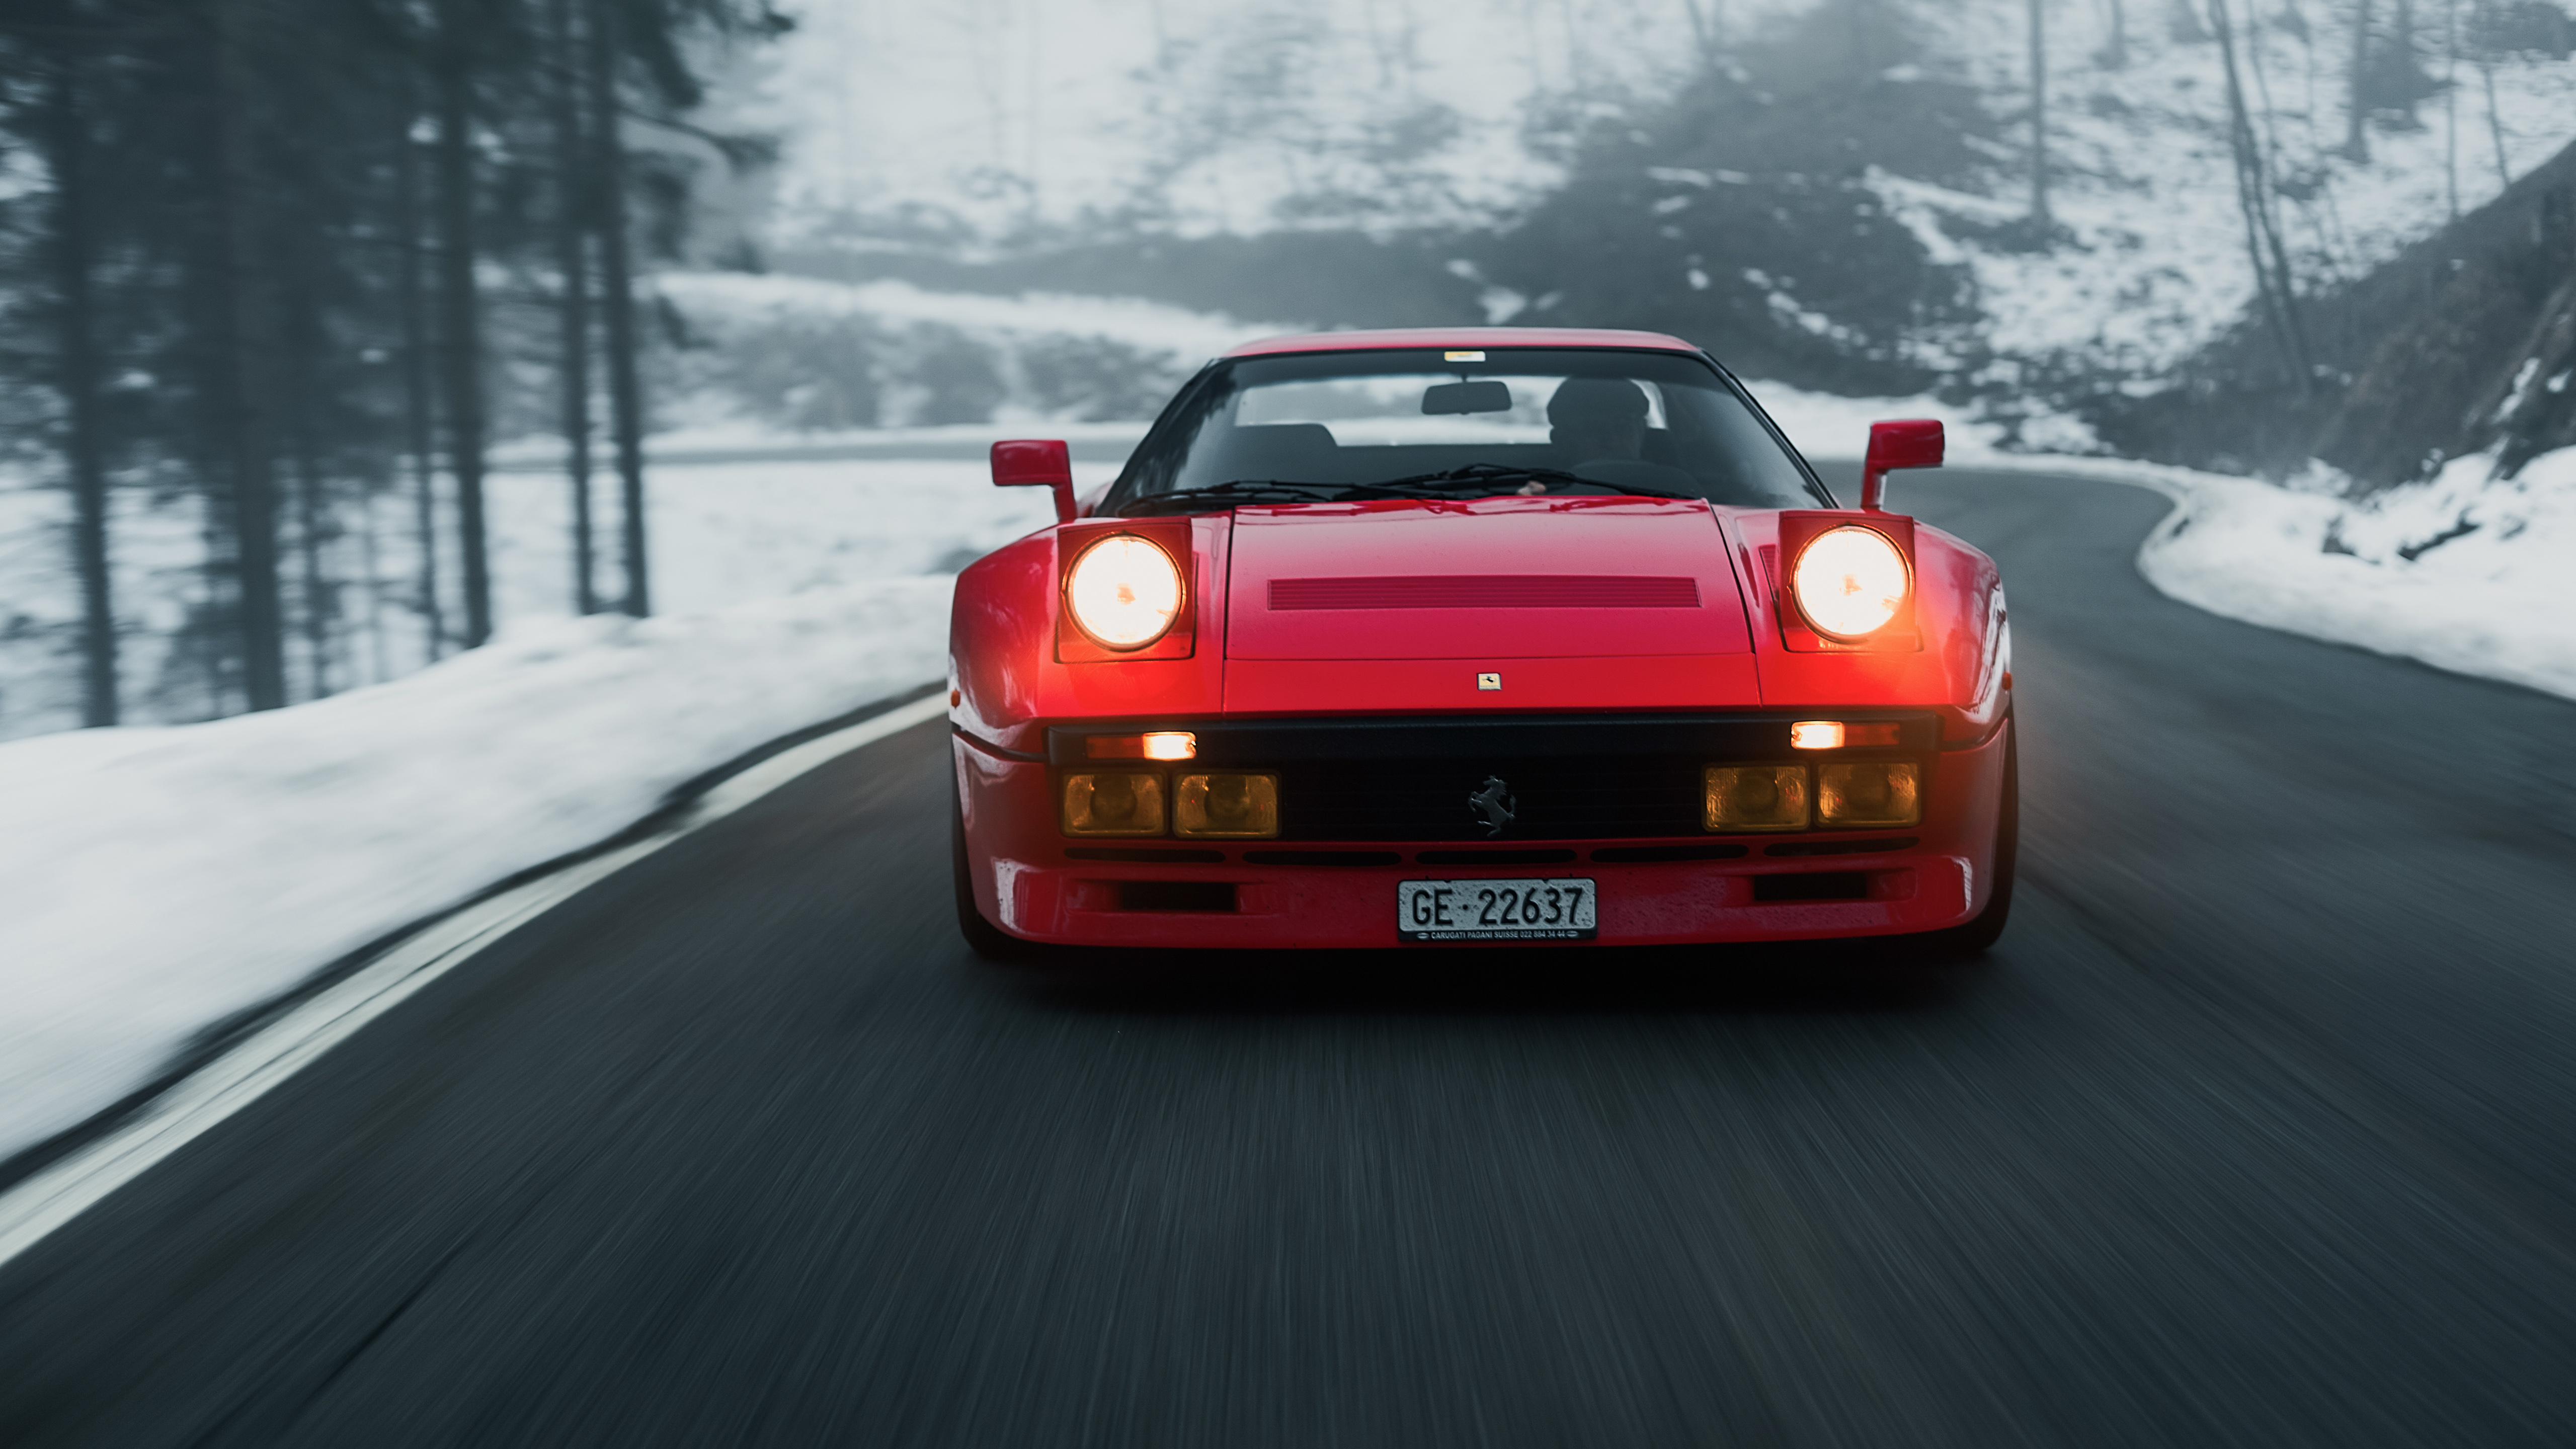 Ferrari GTO 1984 5K Wallpaper | HD Car Wallpapers | ID #12508